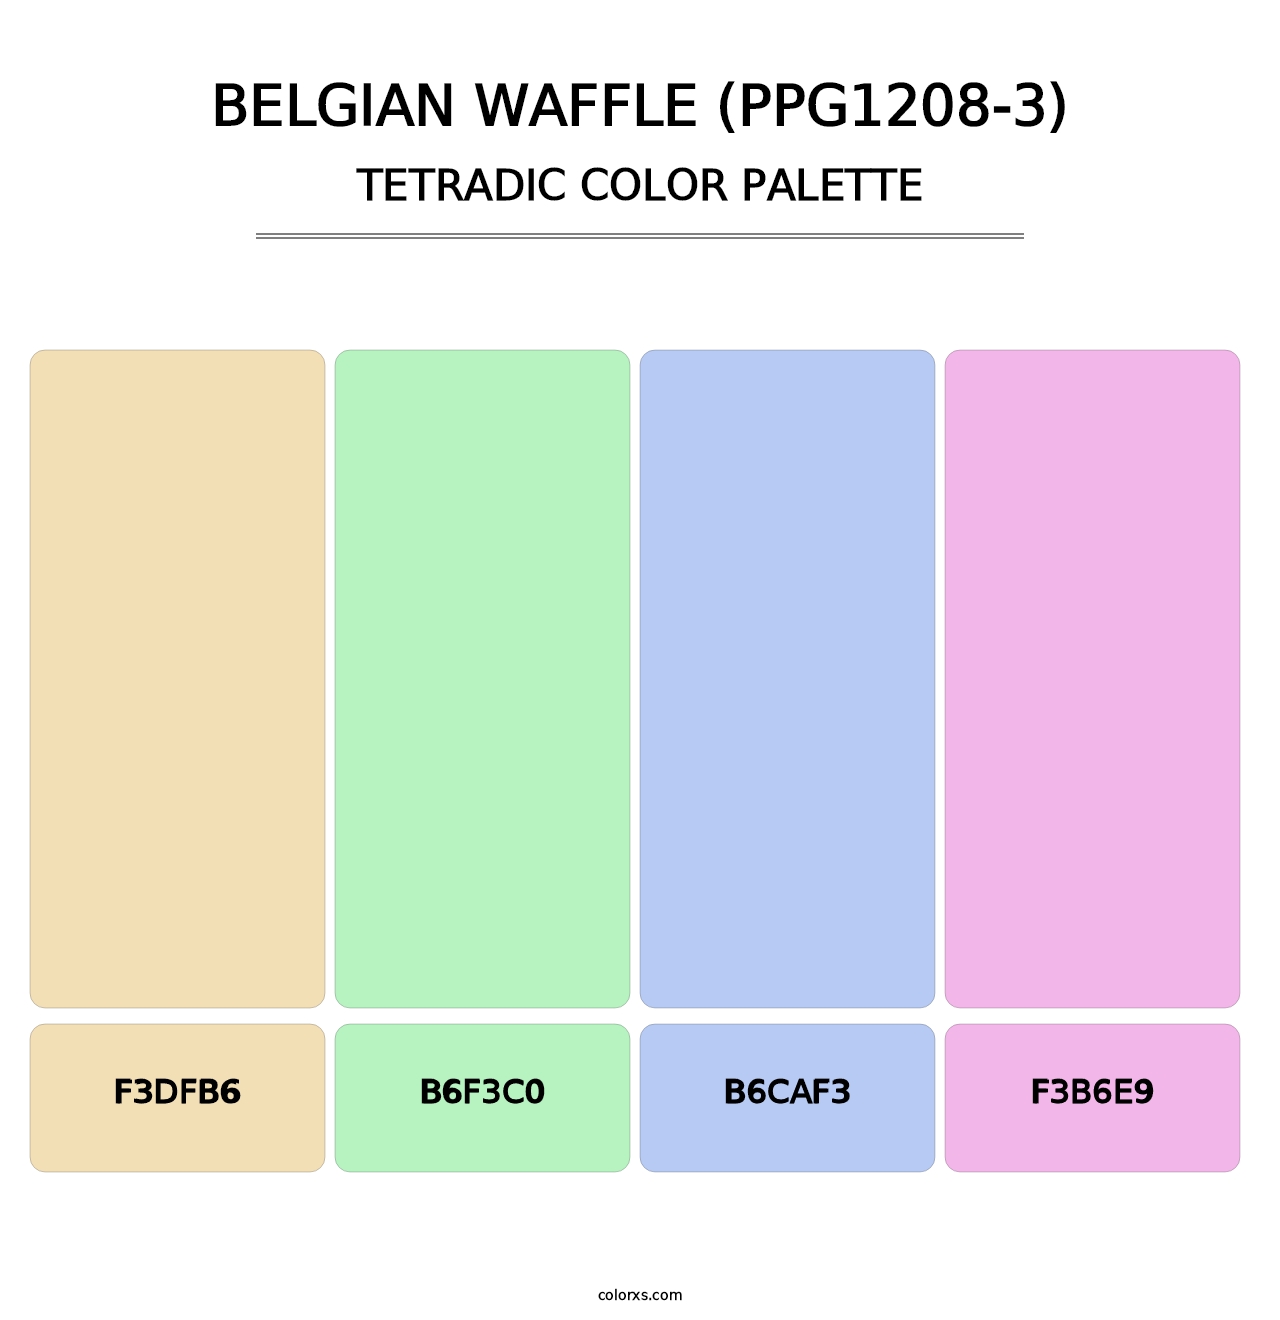 Belgian Waffle (PPG1208-3) - Tetradic Color Palette